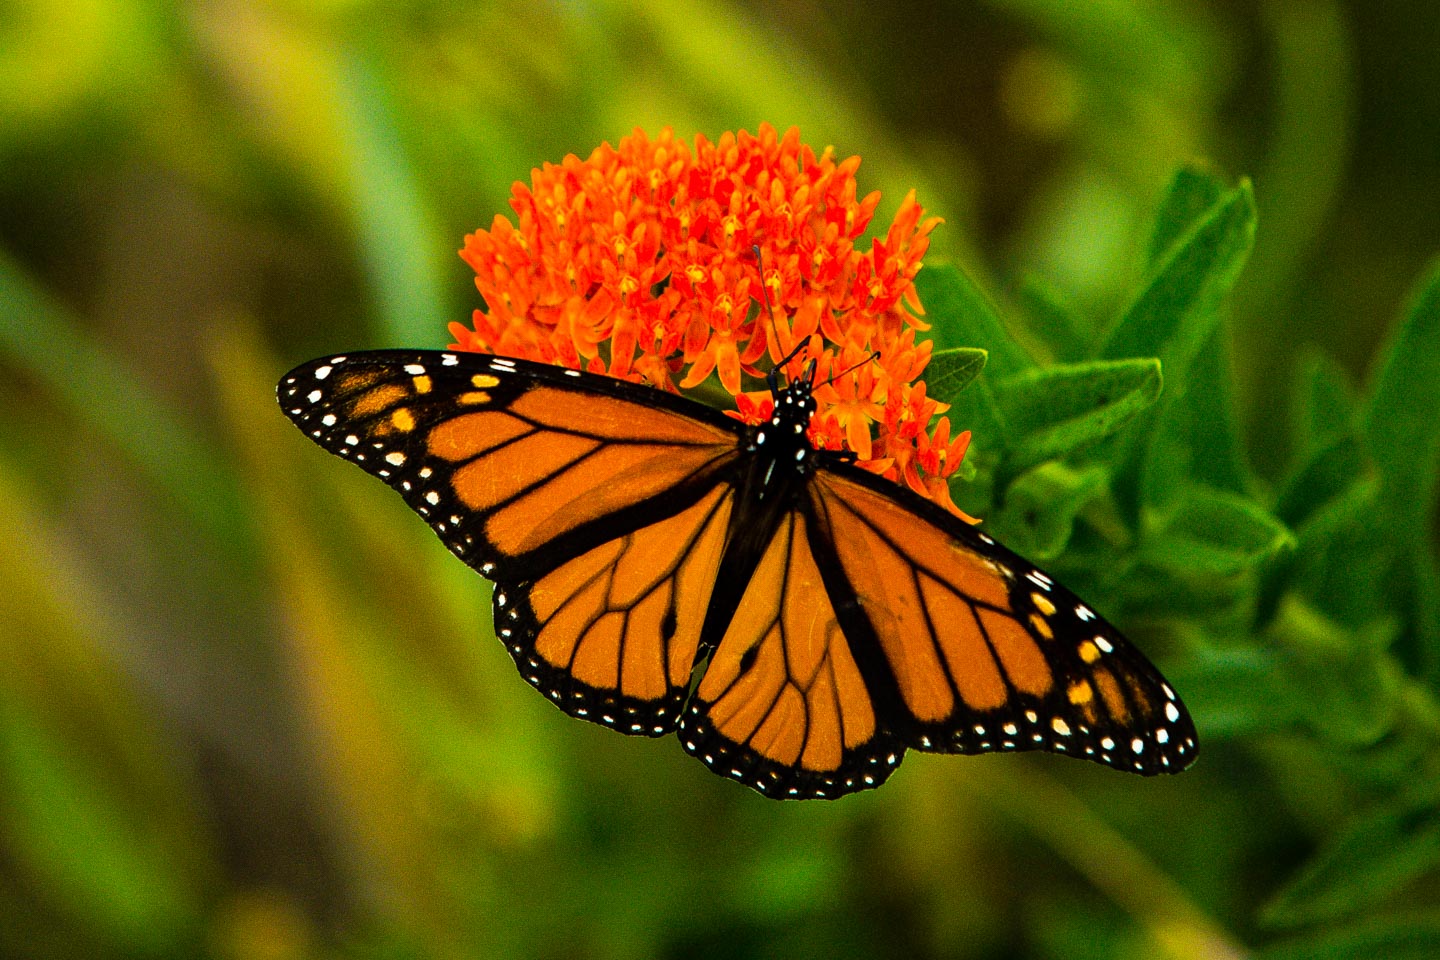 Read More: Celebrate Pollinator Week June 17-23